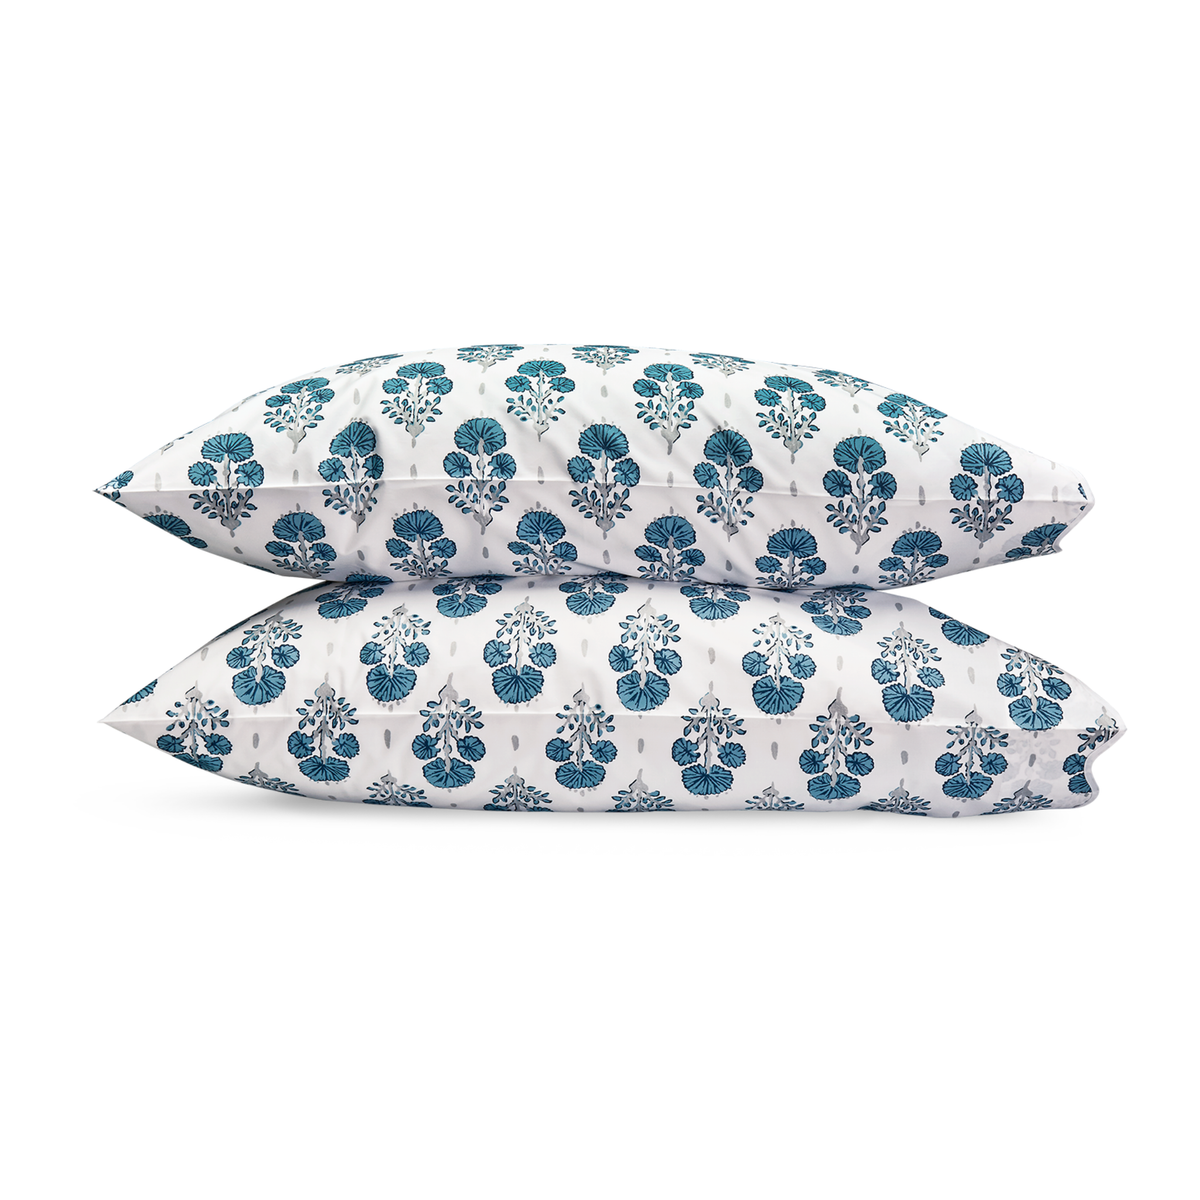 Pair of Pillowcases of Lulu DK Matouk Joplin Bedding in Mineral Blue Color